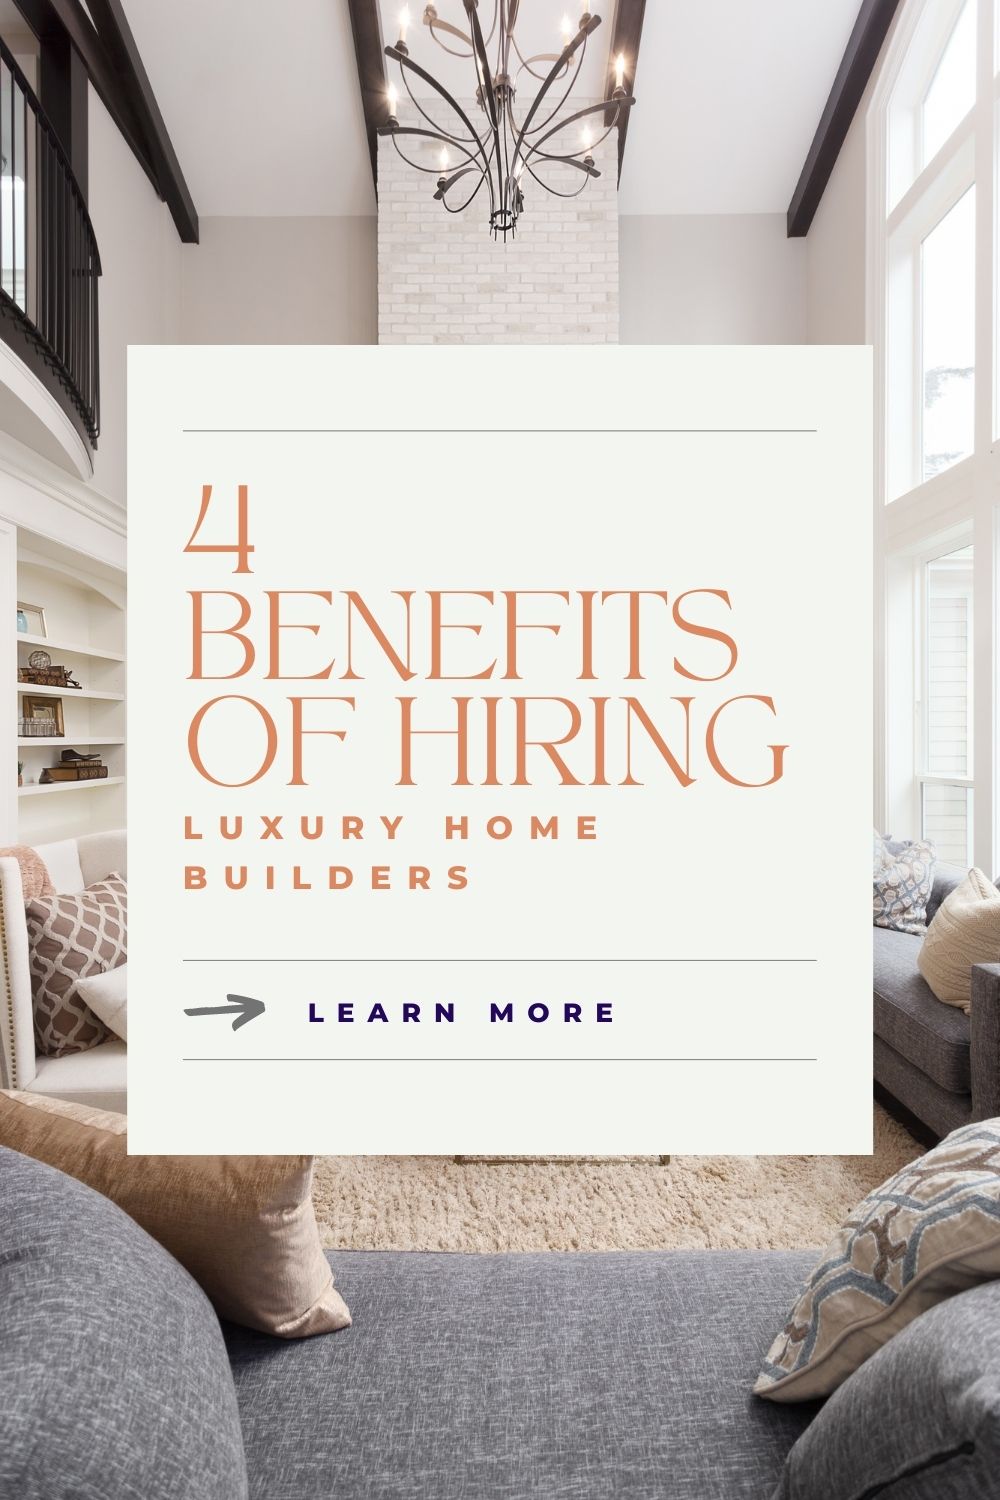 4 Benefits of Hiring Luxury Home Builders